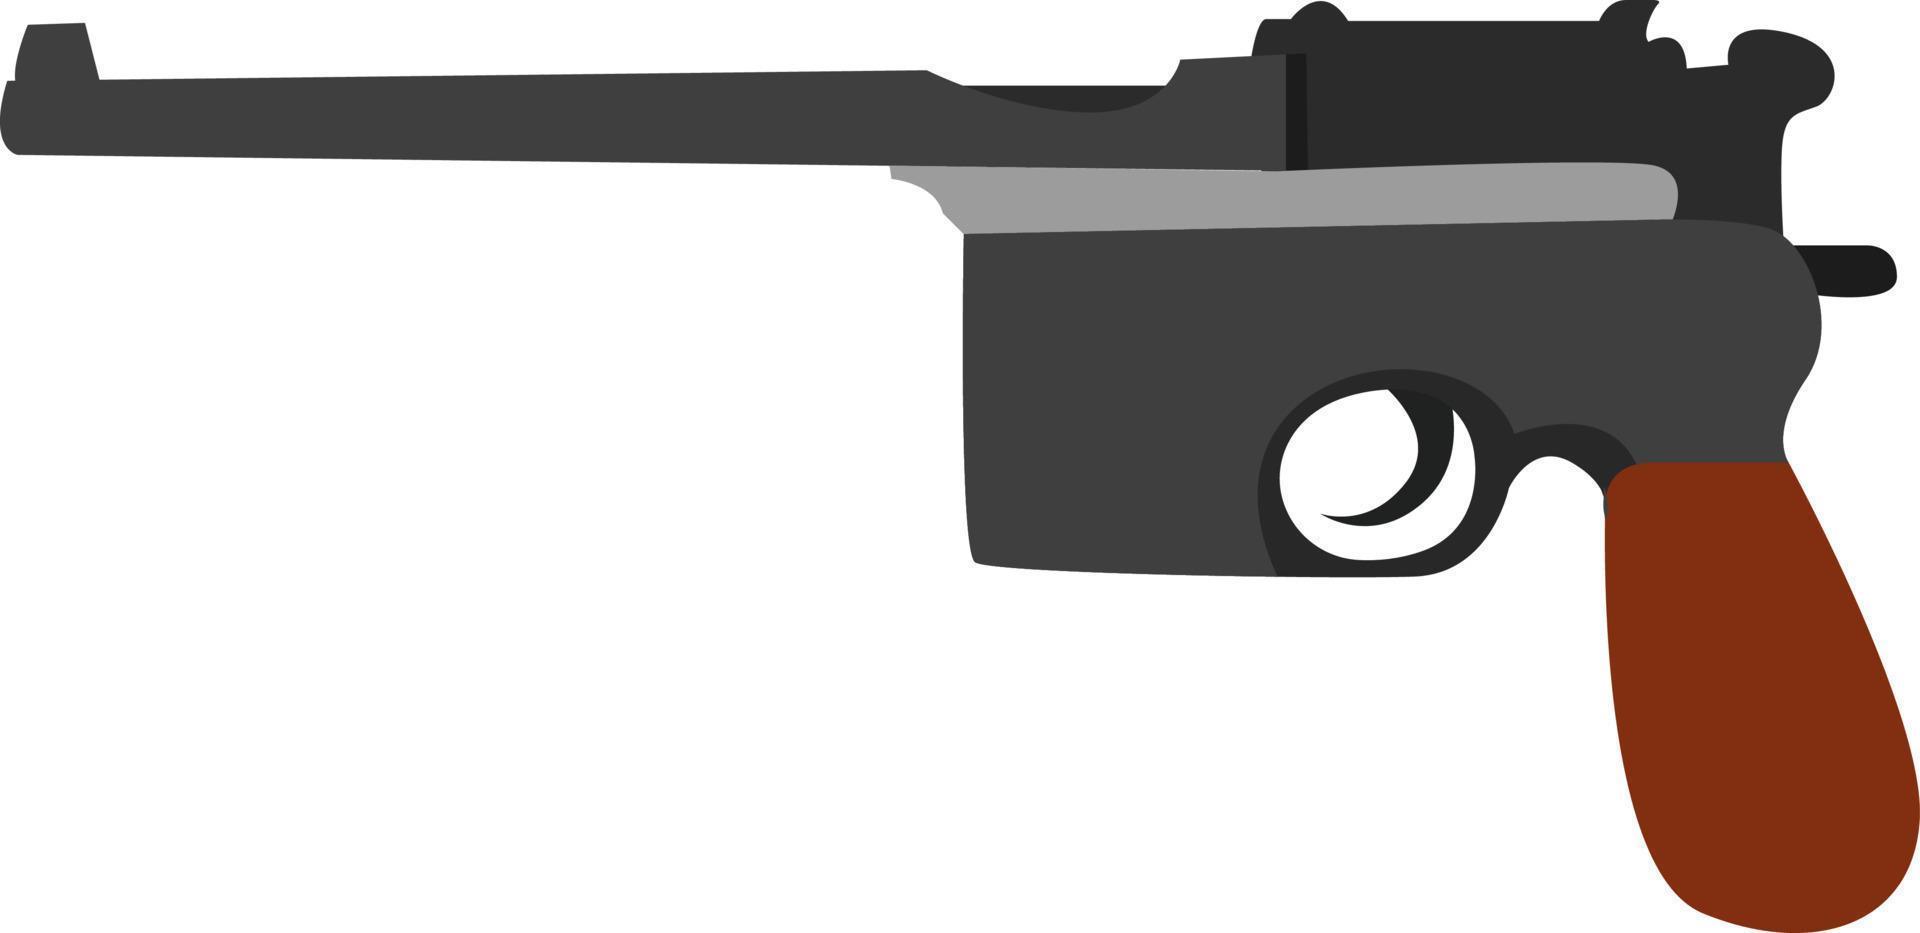 Pistola mauser, ilustración, vector sobre fondo blanco.